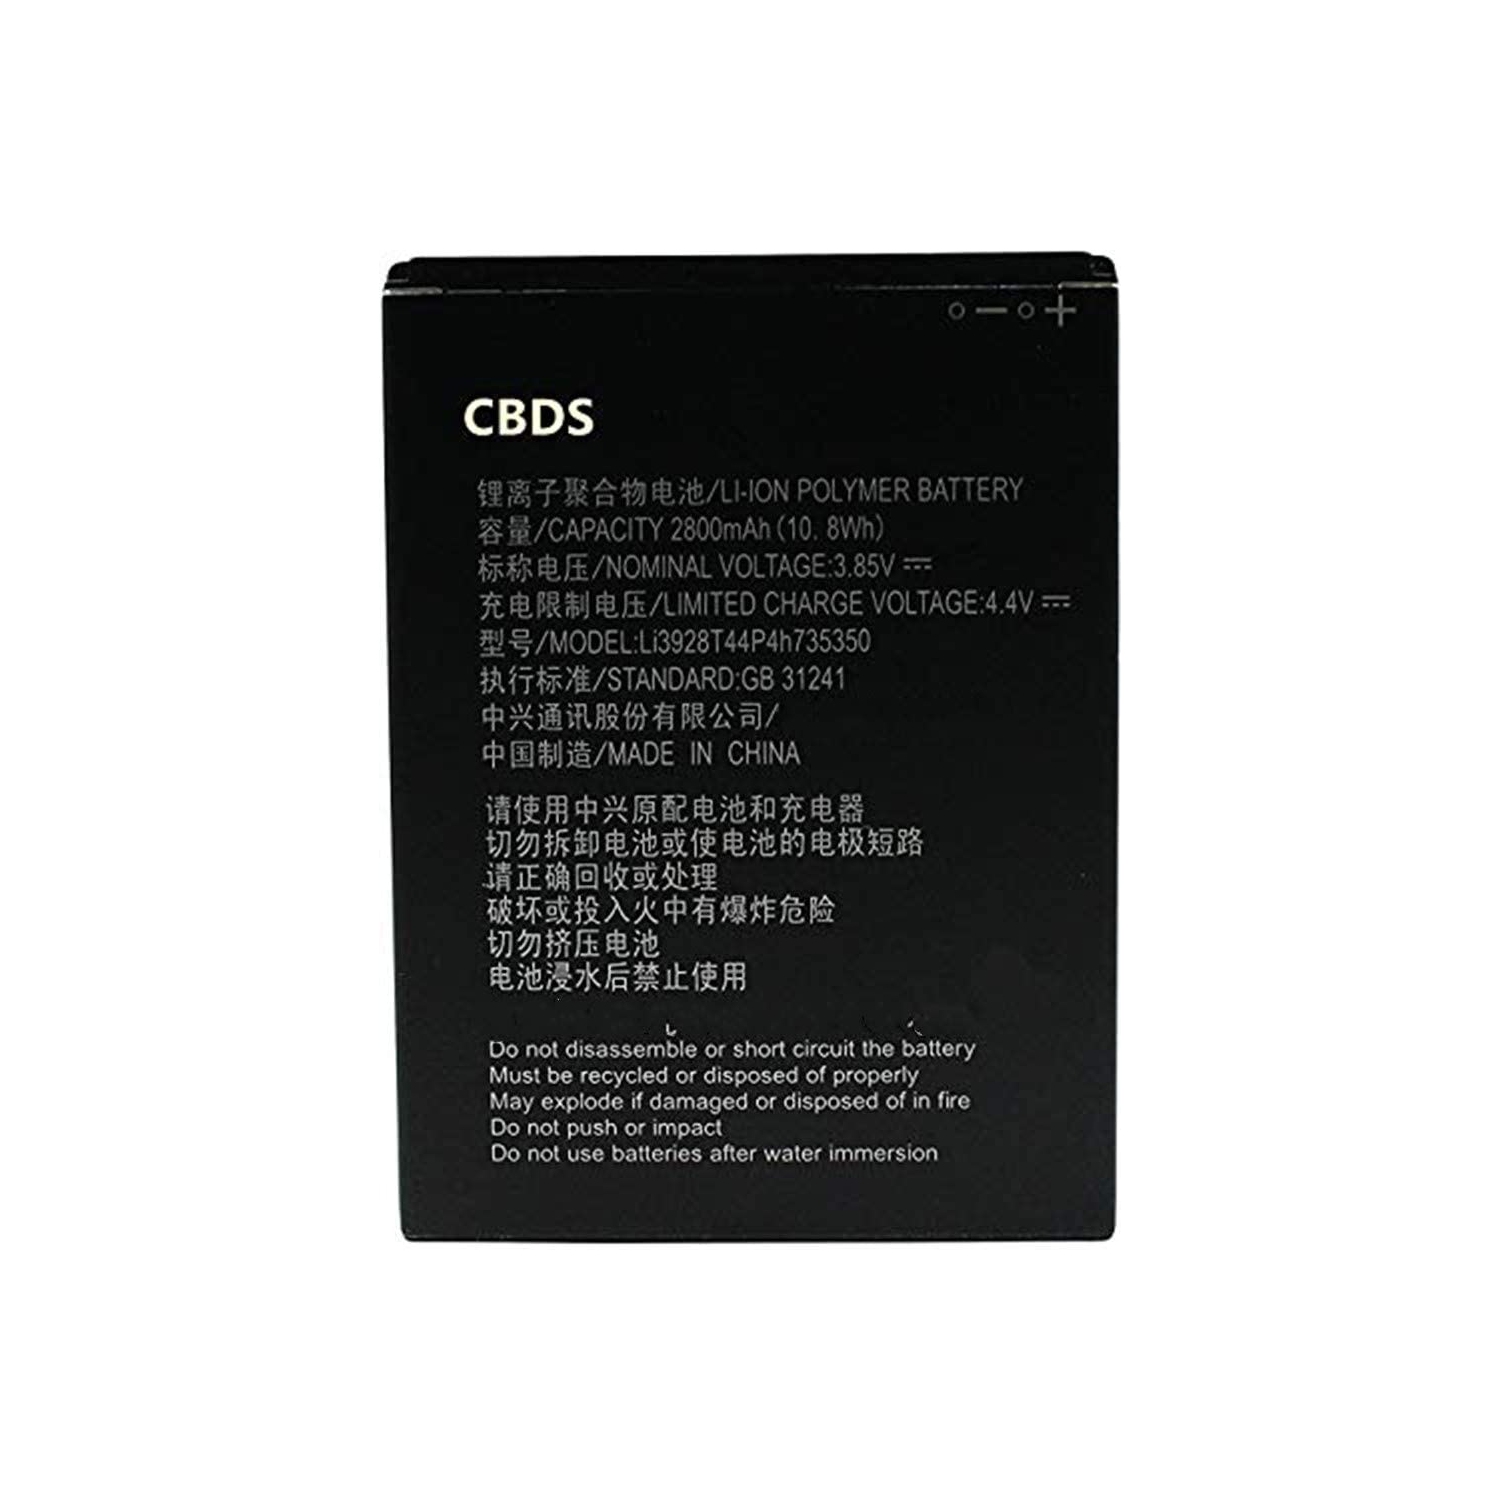 (CBDS) 2800mAh, 10.8 Wh Replacement Battery - Compatible with ZTE GRAND X V975 MAVEN 2 Z831 ZTE AVID PLUS Z828 ZTE AVID